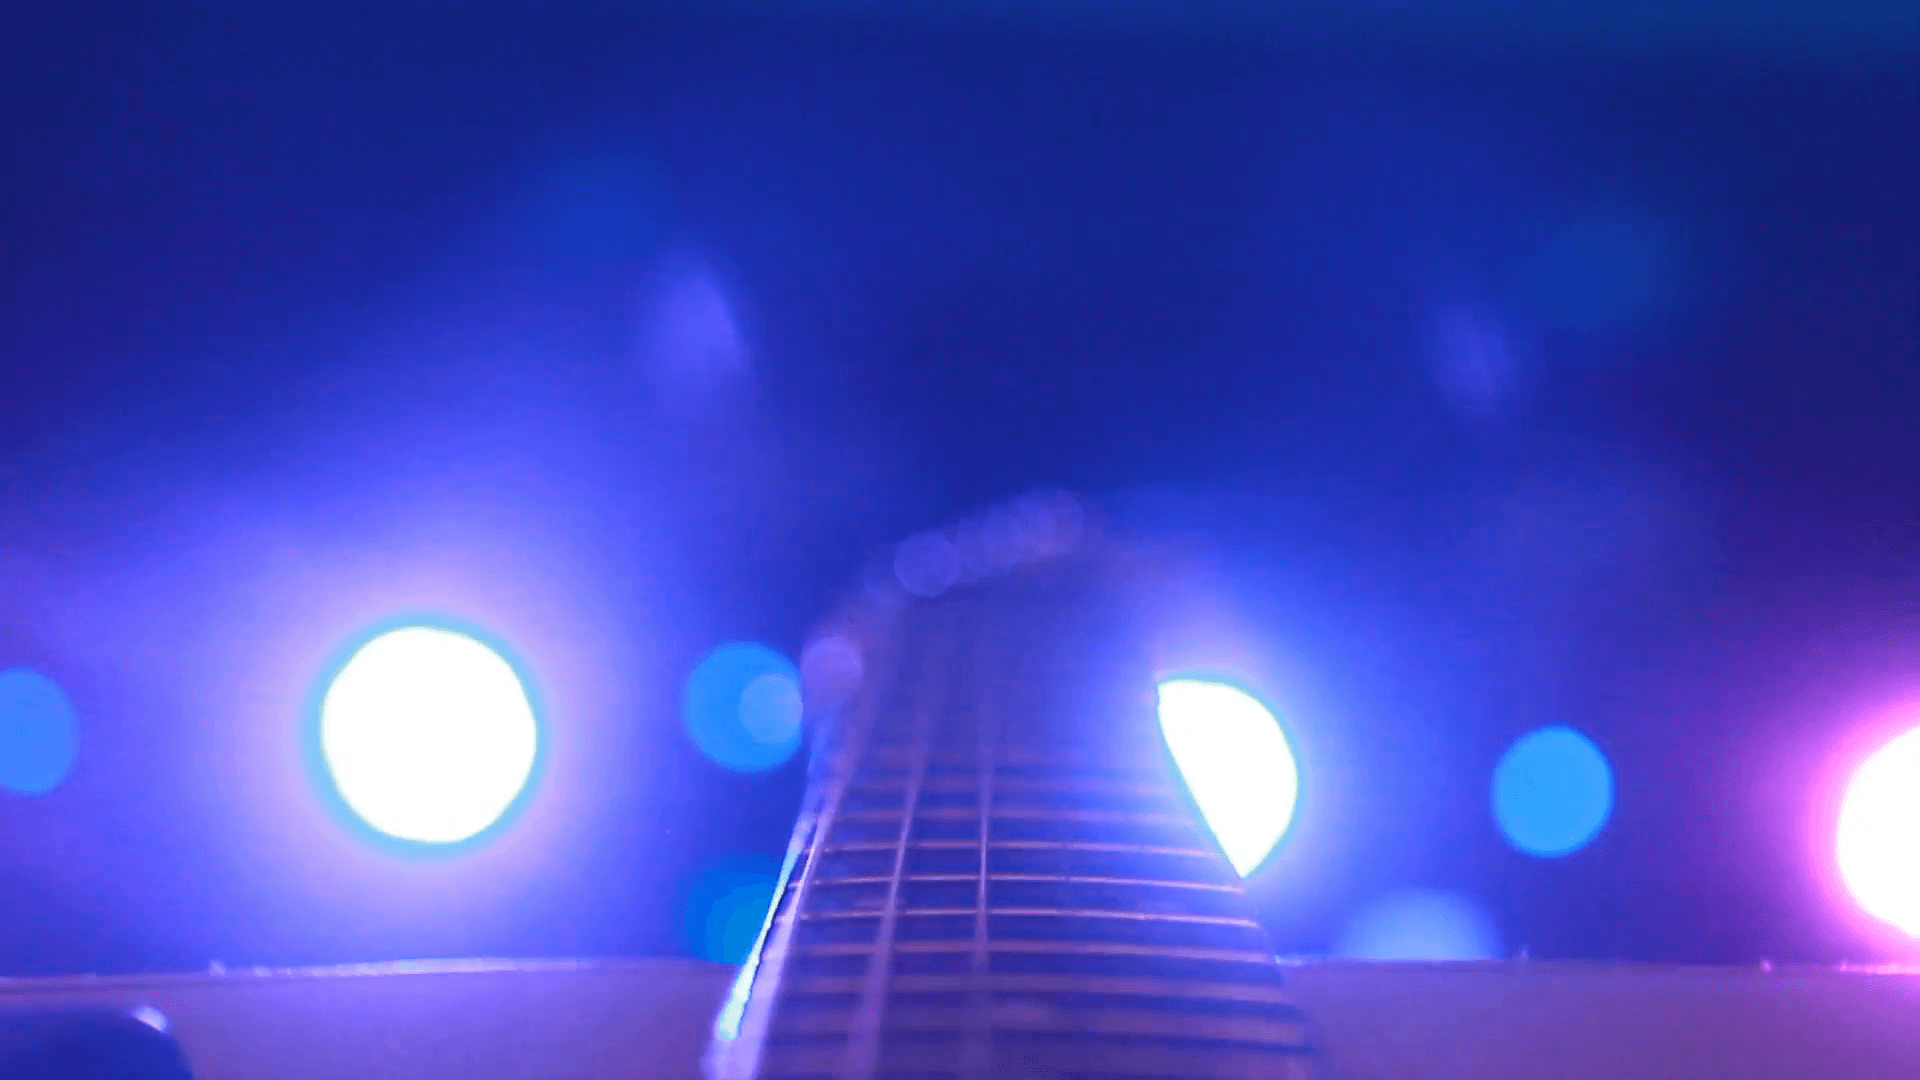 rock concert: backstage: guitar on the background of stage lighting